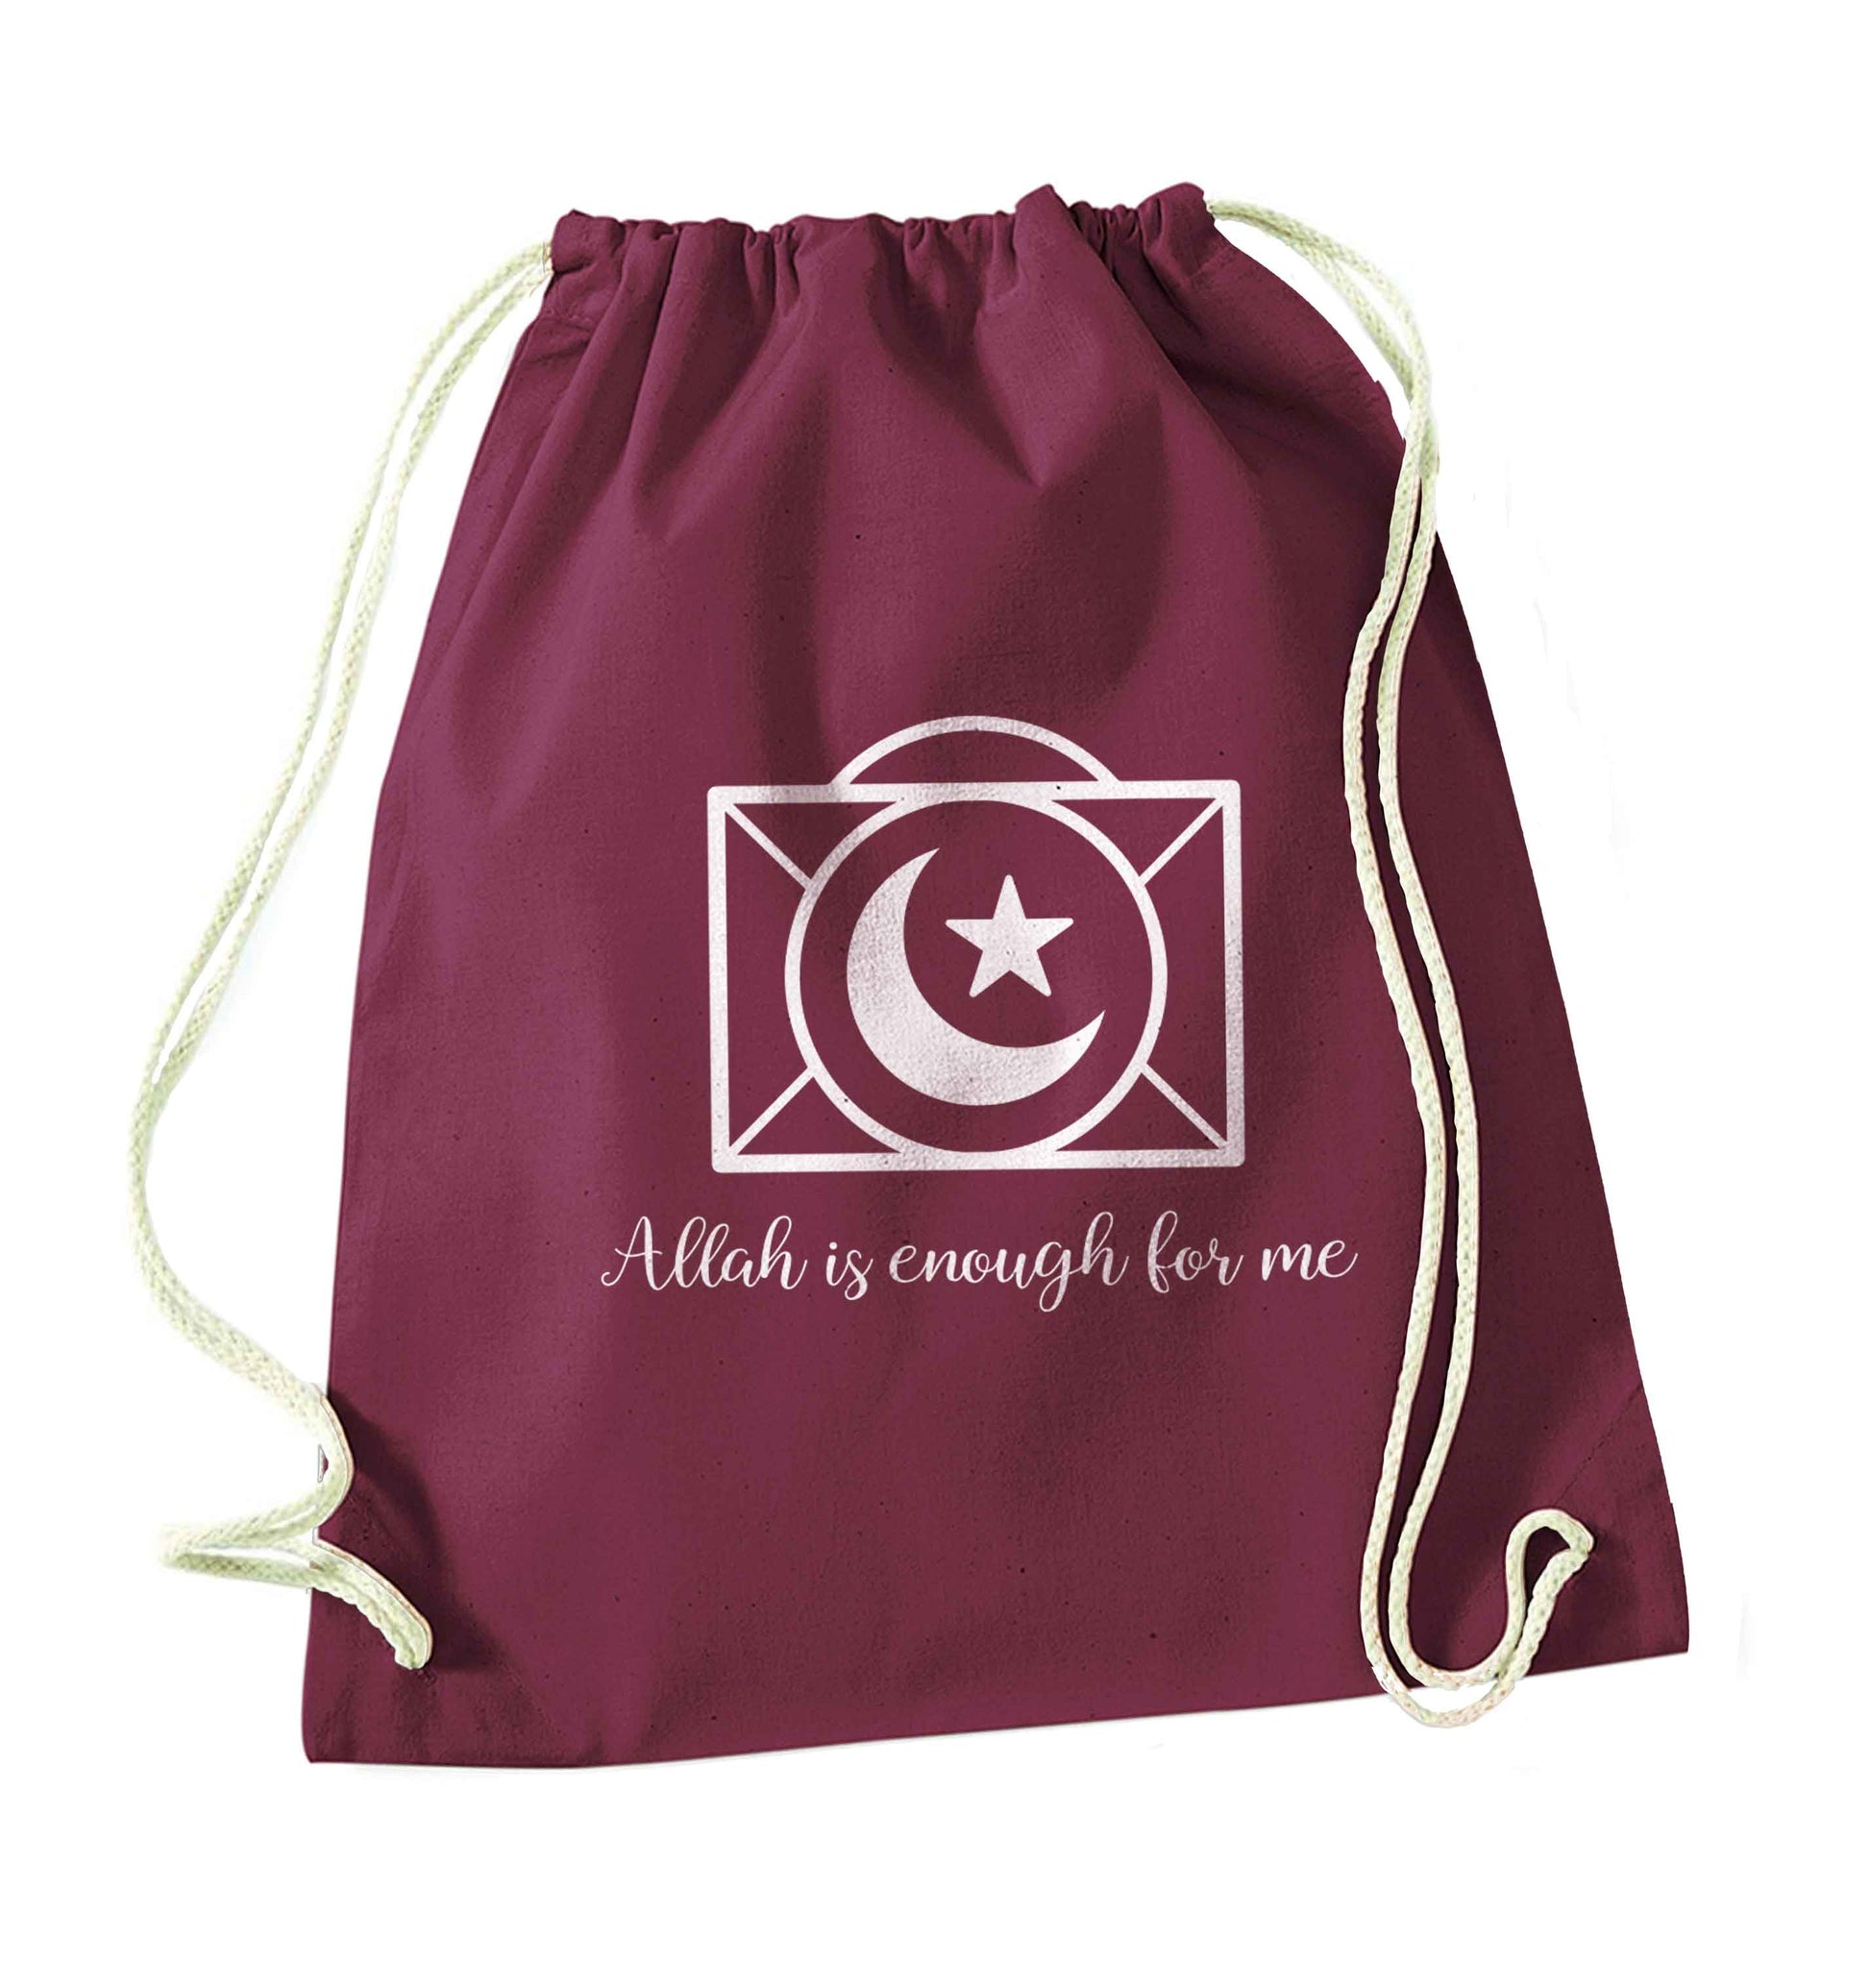 Allah is enough for me maroon drawstring bag